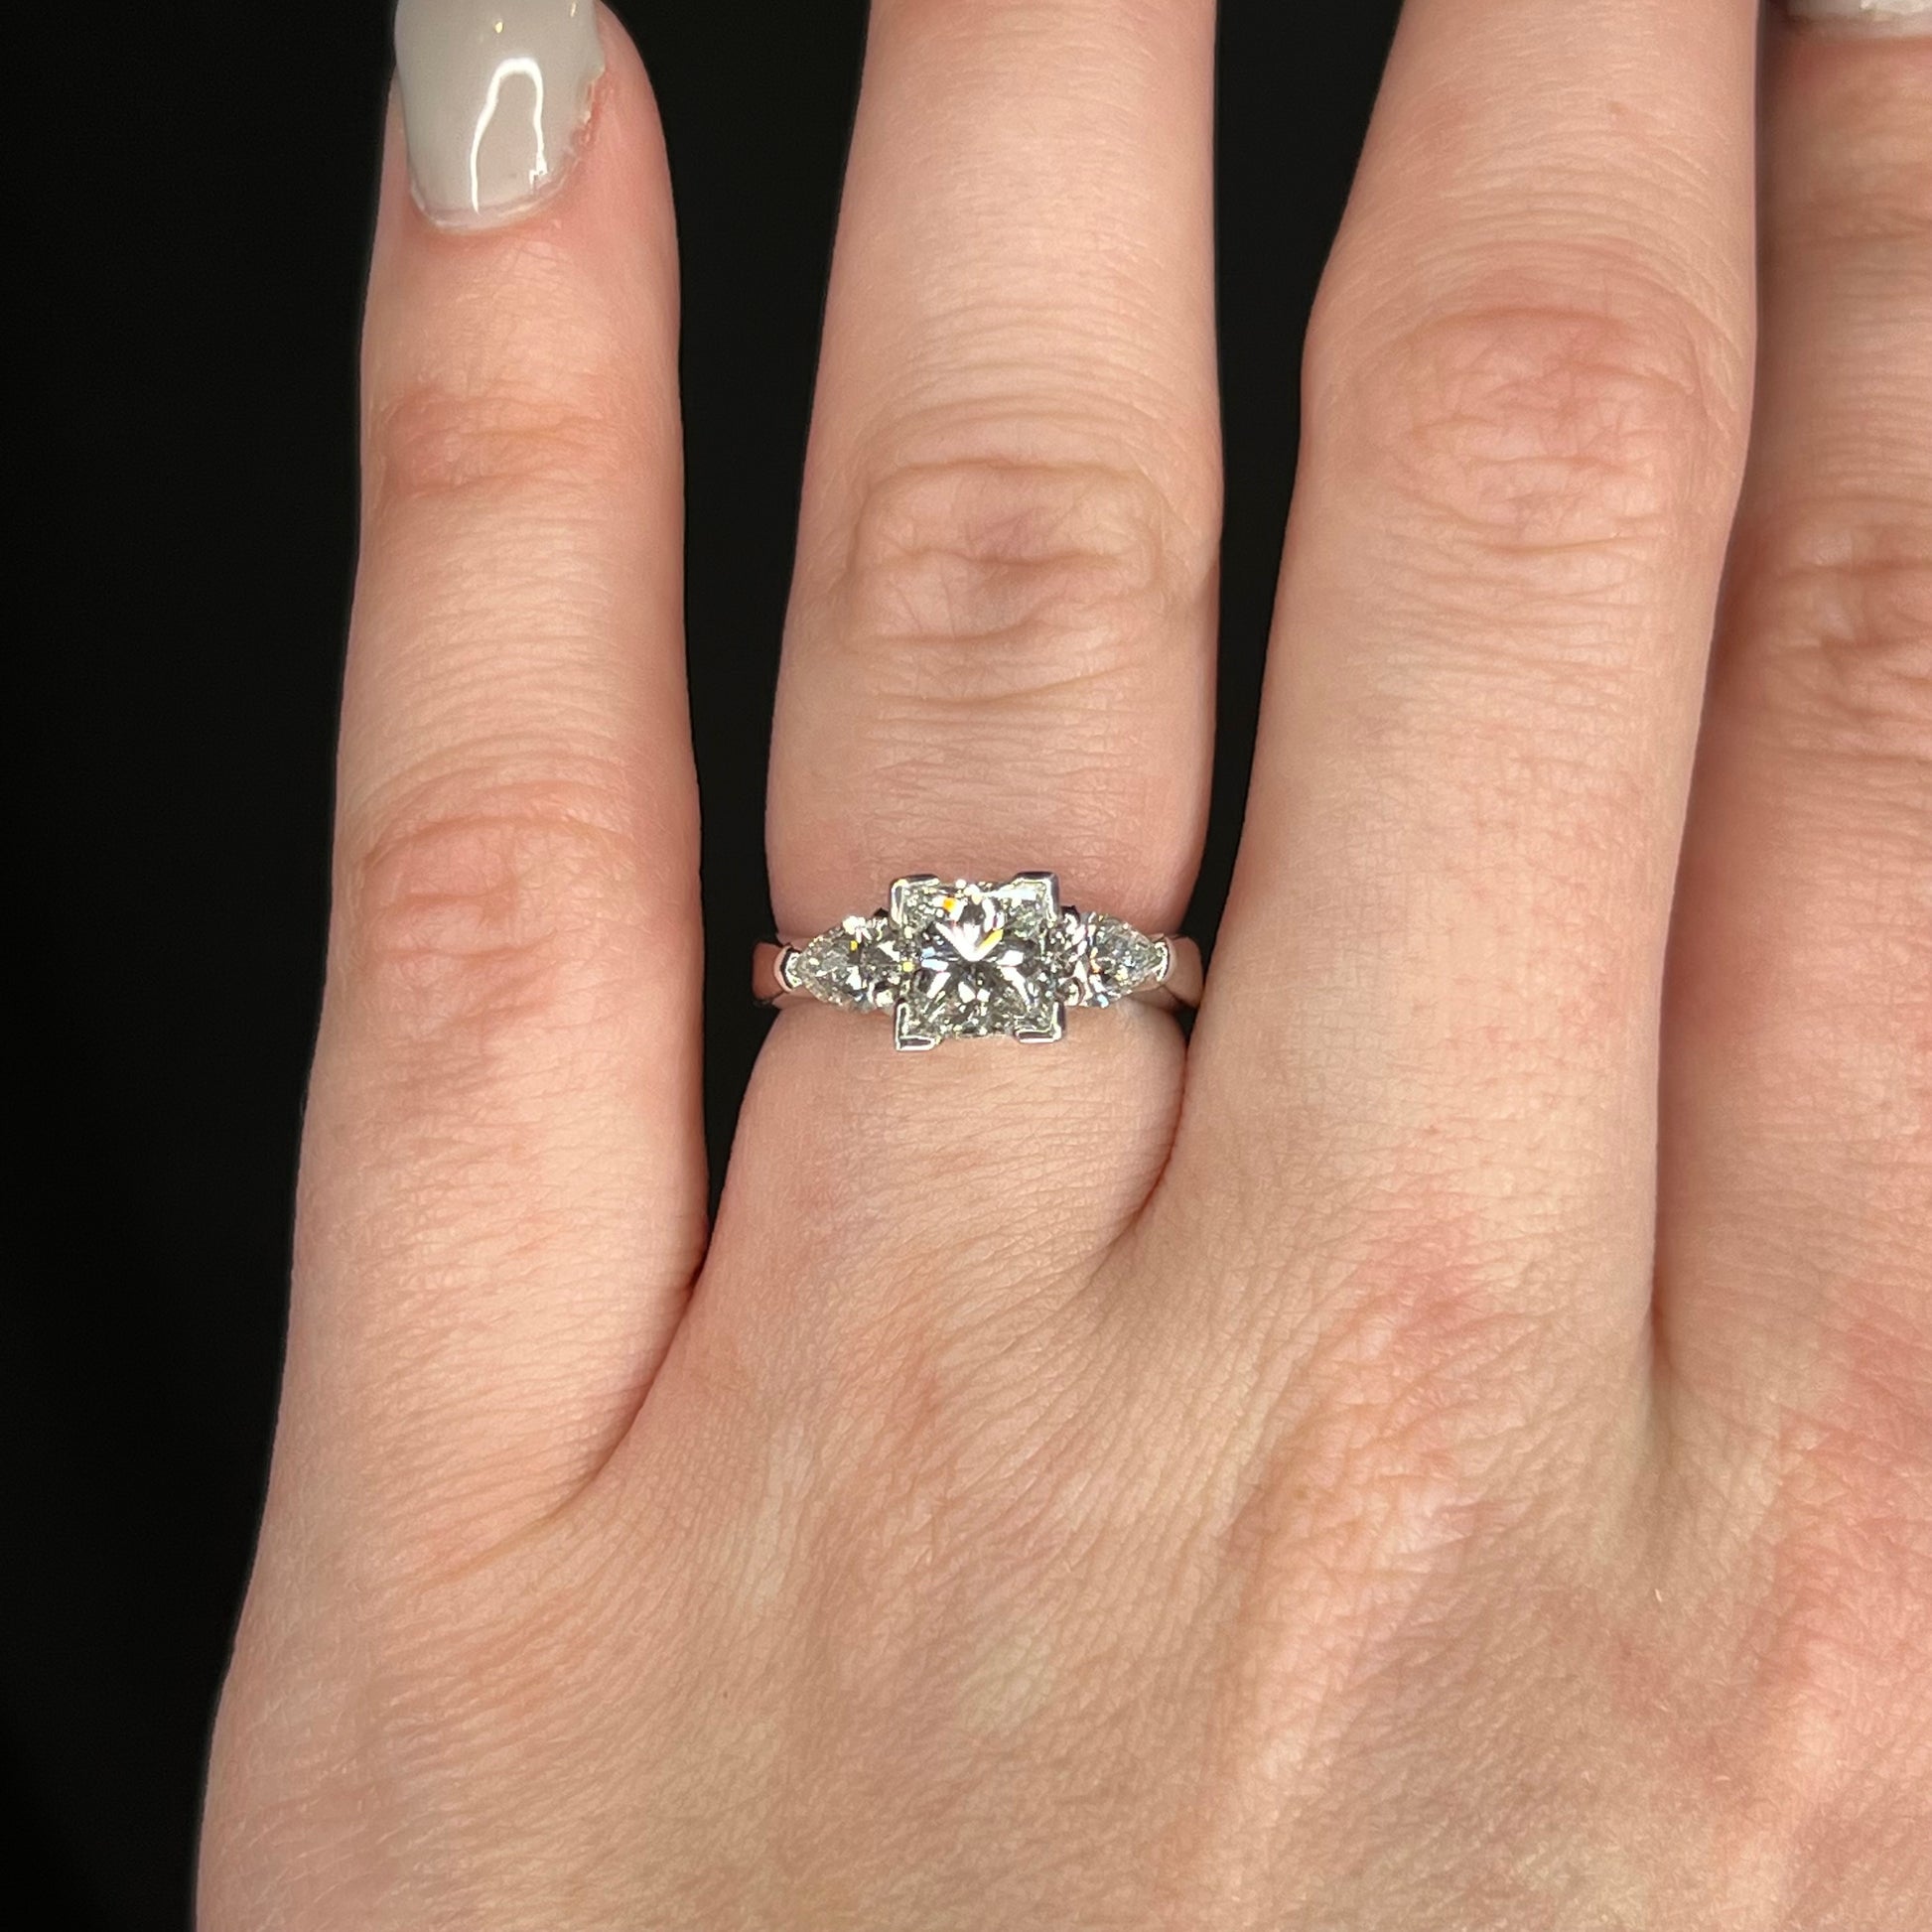 1.41 Princess Cut Diamond Engagement Ring in Platinum